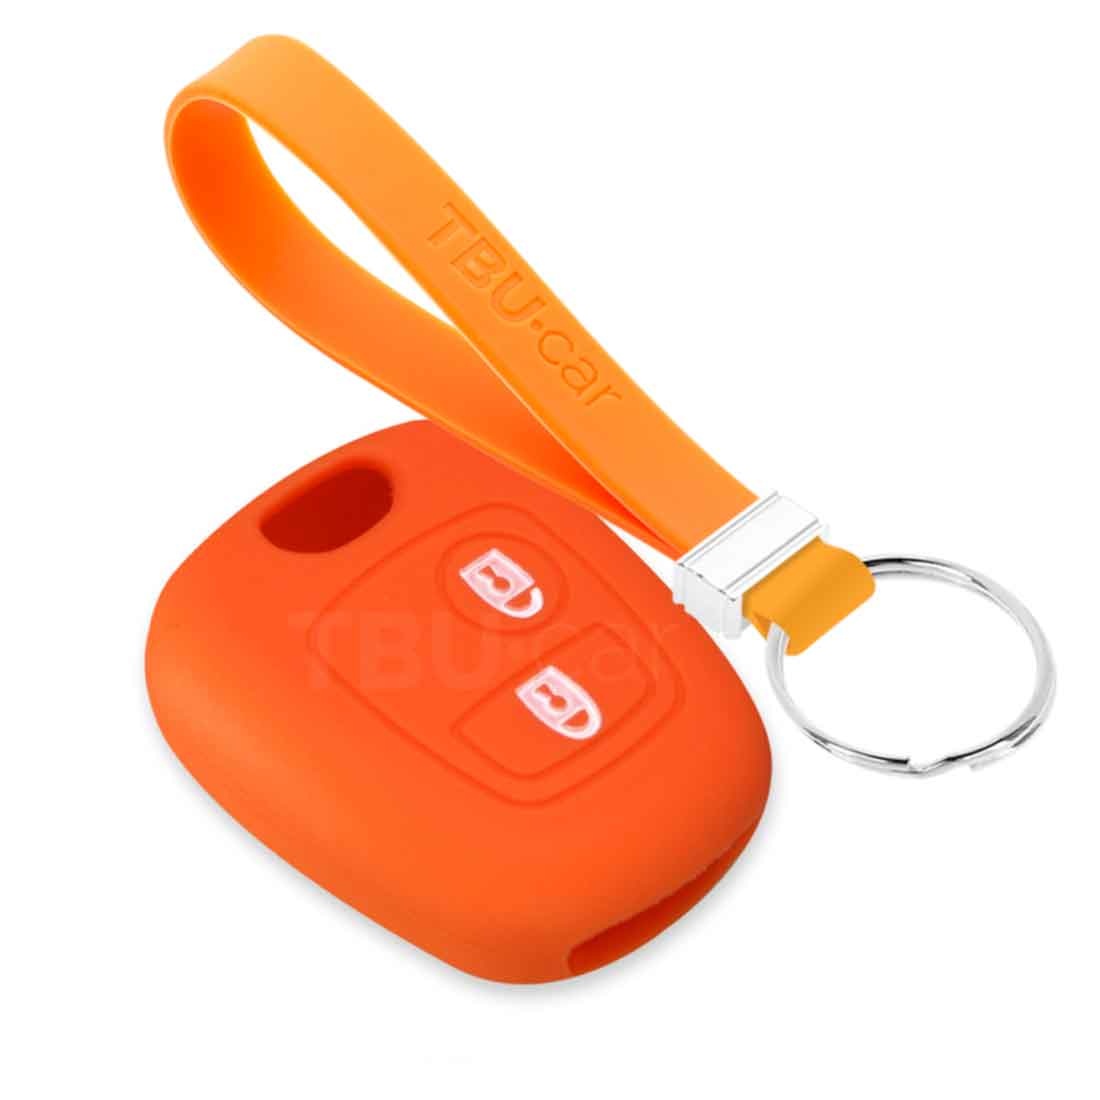 TBU car TBU car Autoschlüssel Hülle kompatibel mit Toyota 2 Tasten - Schutzhülle aus Silikon - Auto Schlüsselhülle Cover in Orange